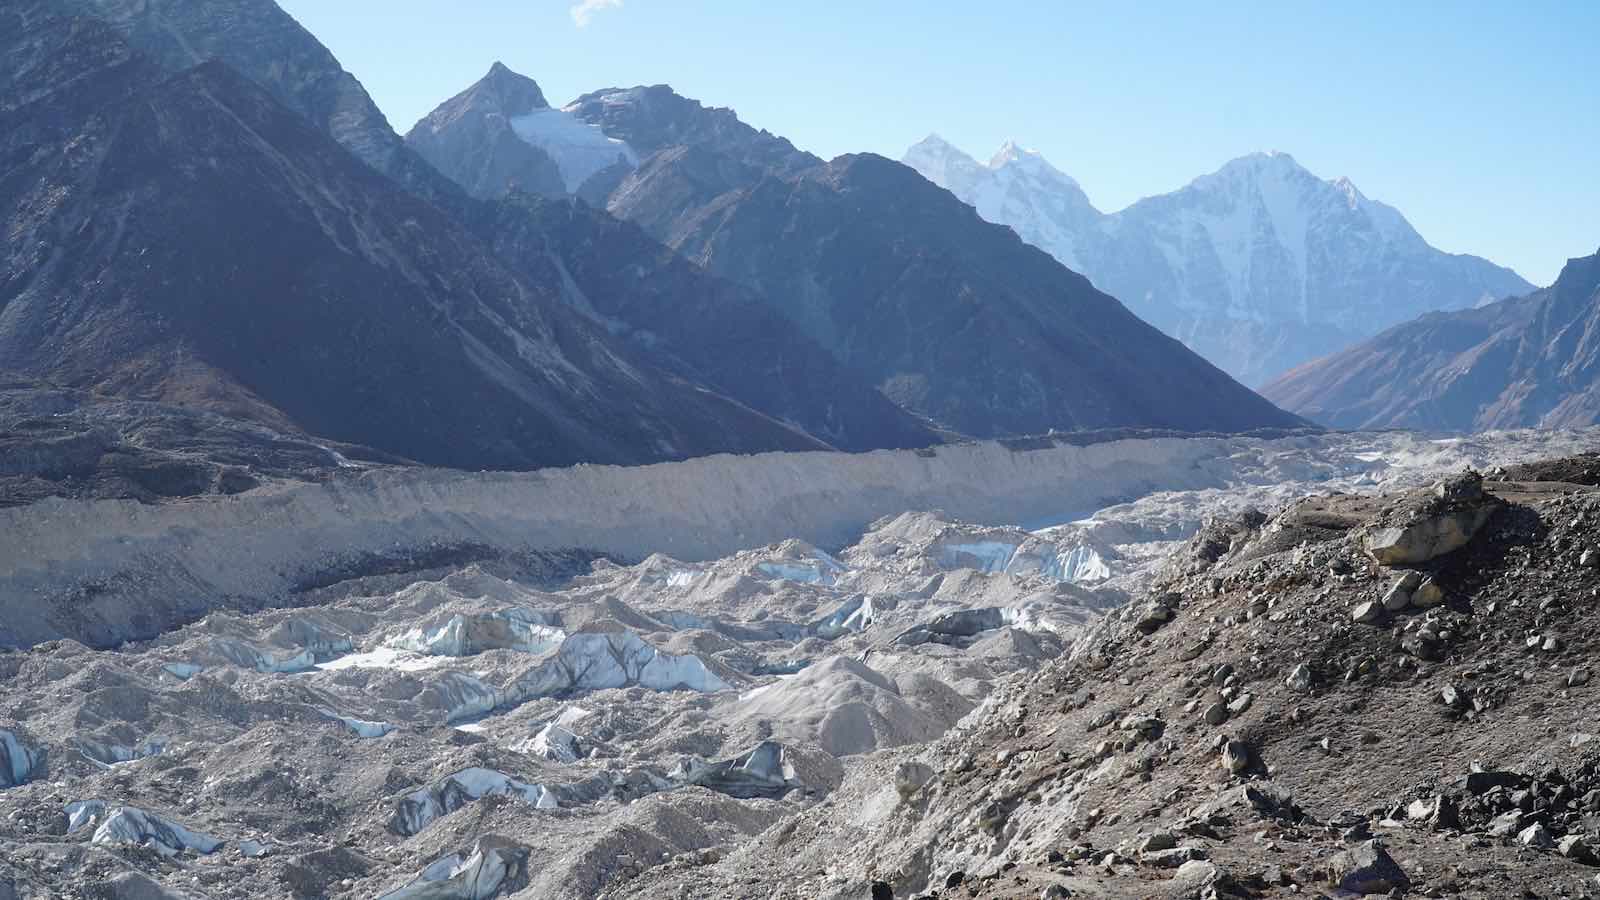 Most of the trek followed the Khumbu Glacier